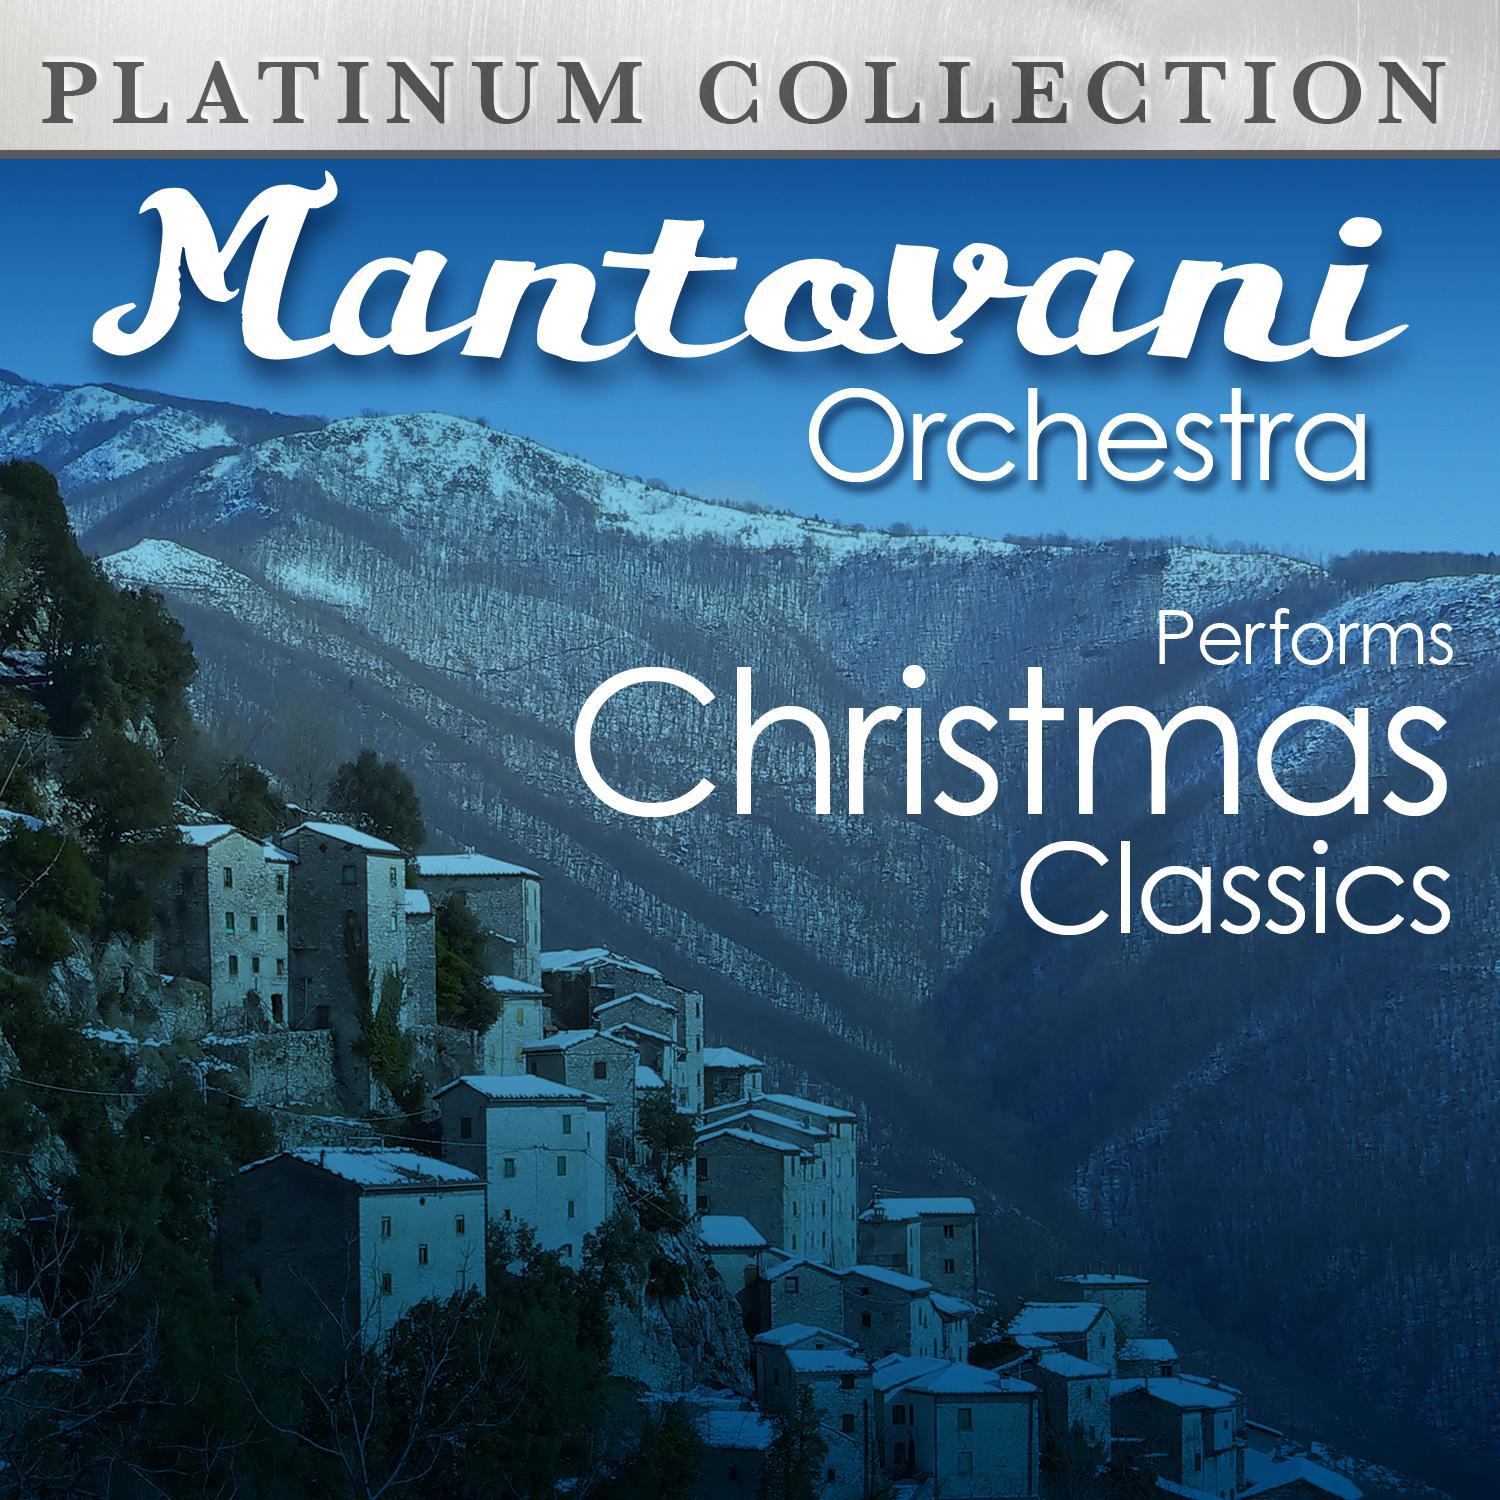 Mantovani Orchestra Performs Christmas Classics